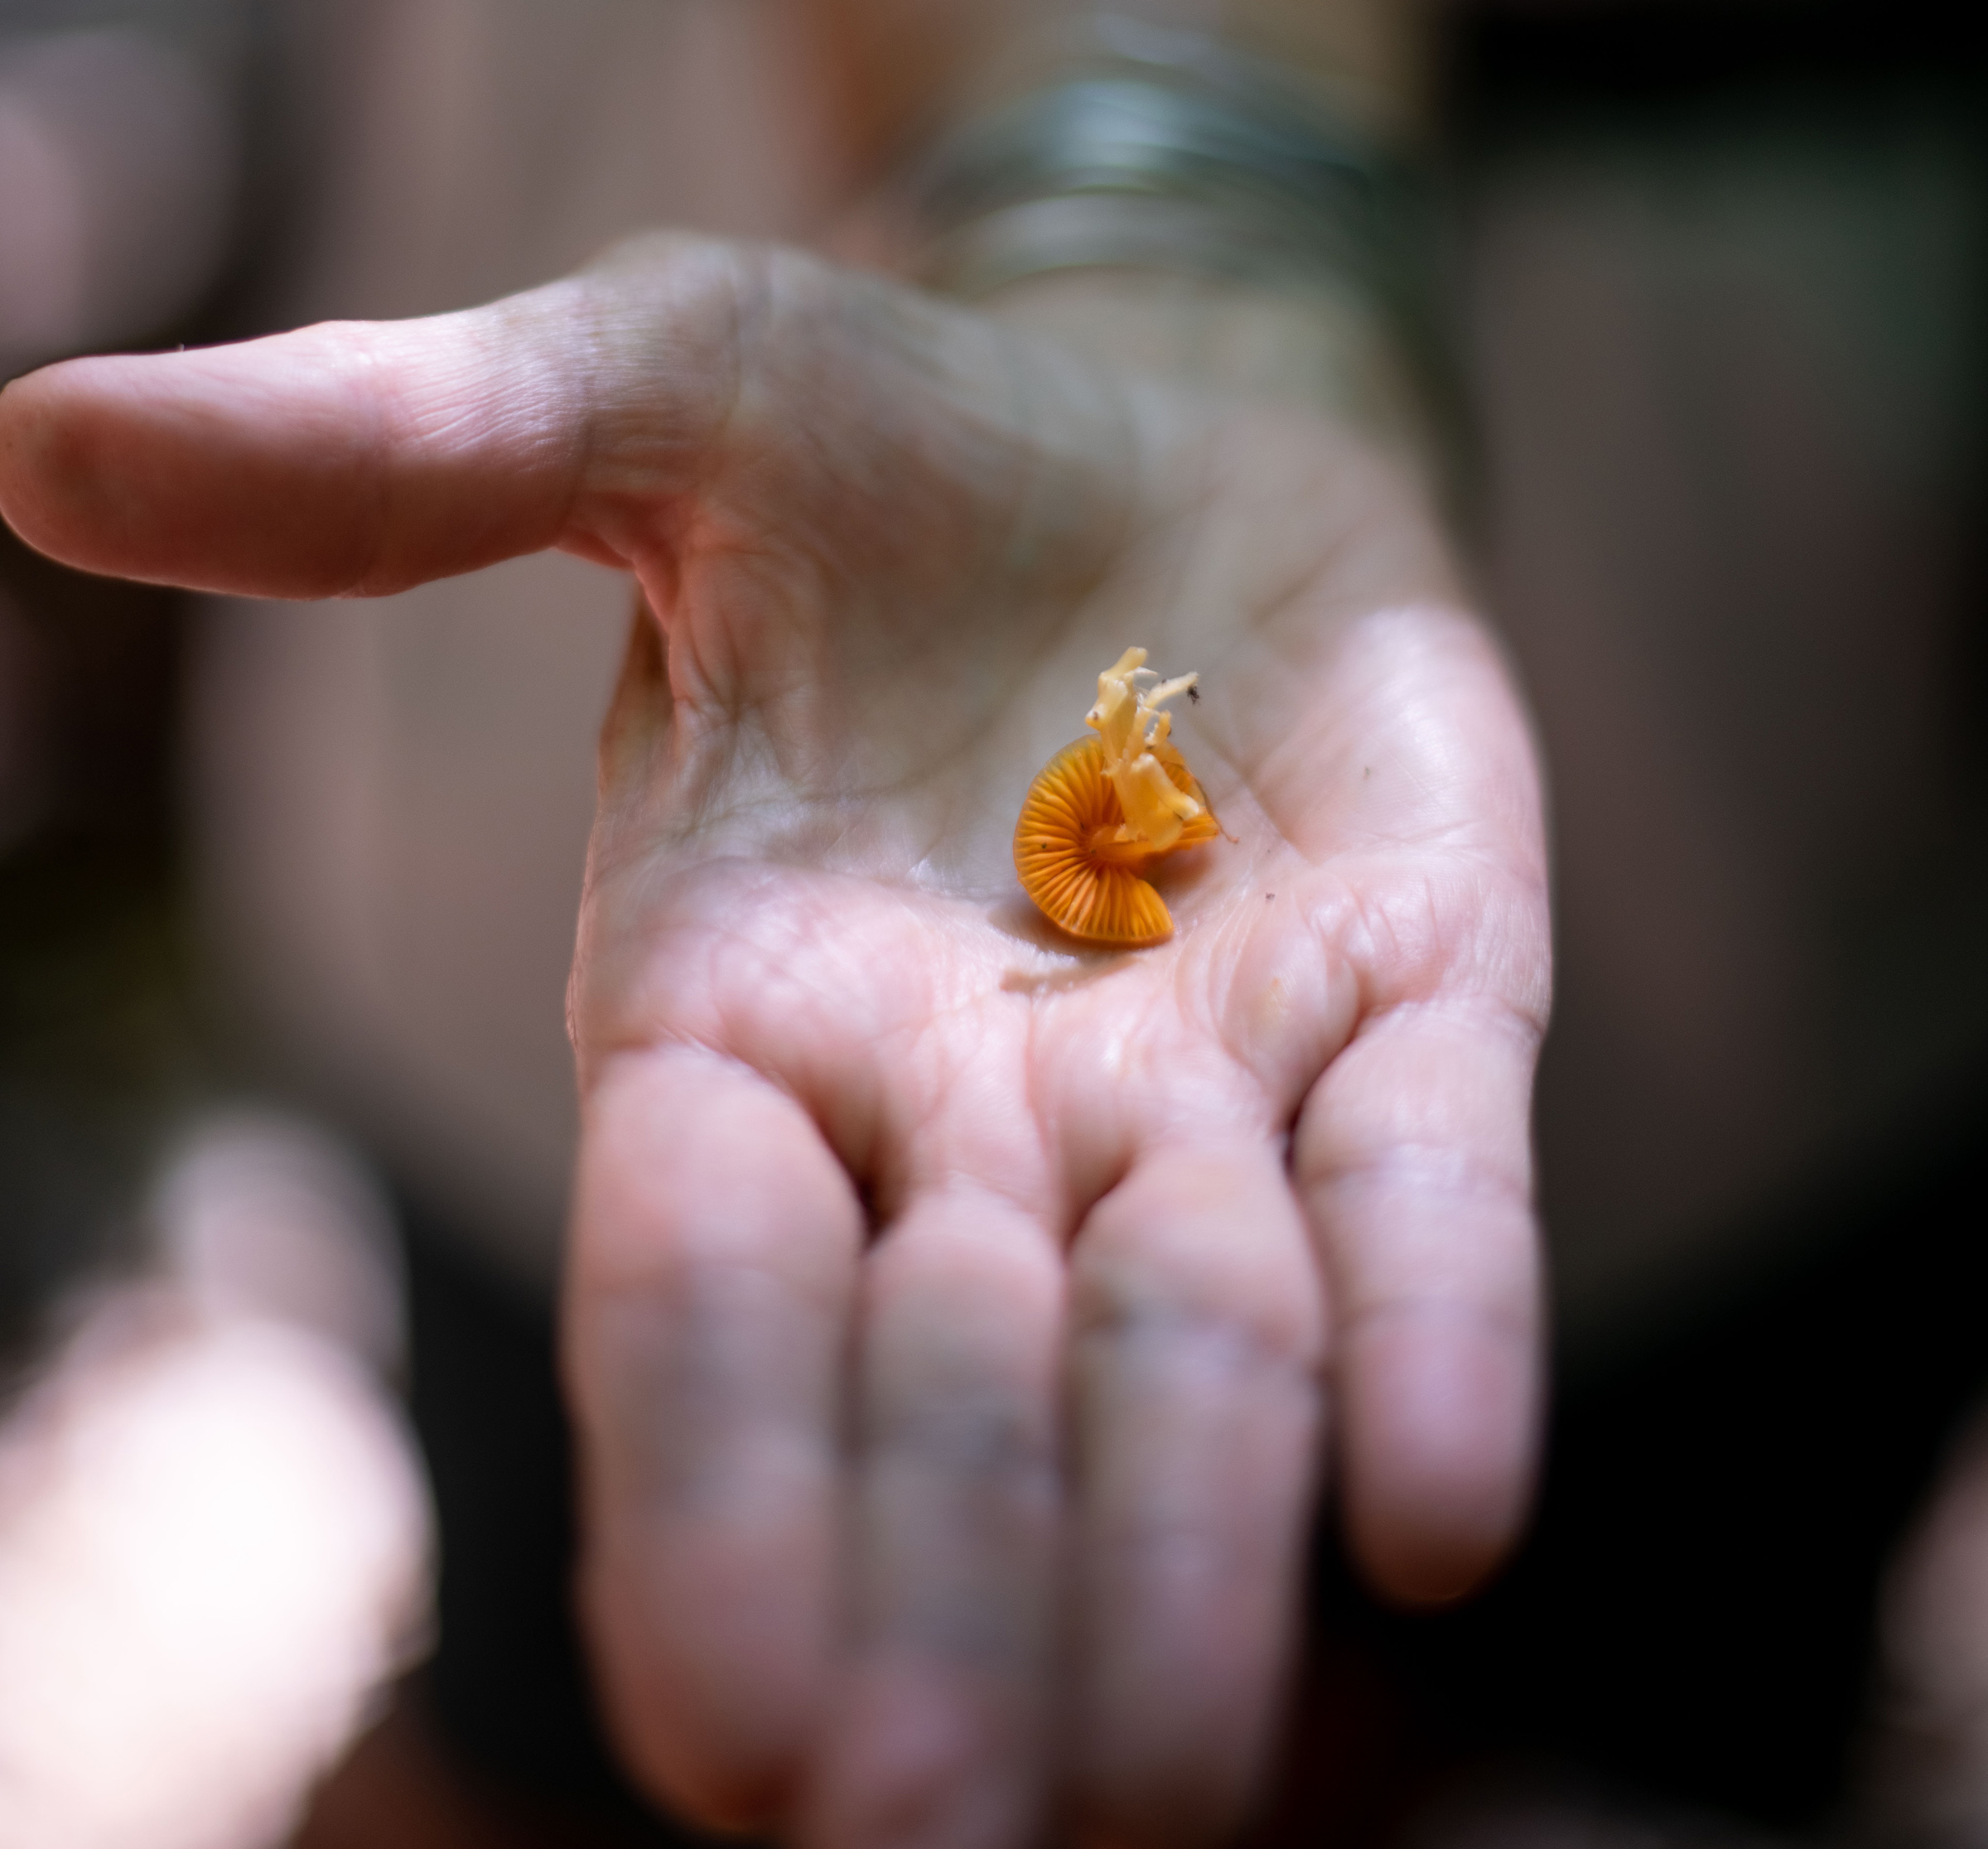 A hand holding an orange mushroom. (photo © Ben Conant)